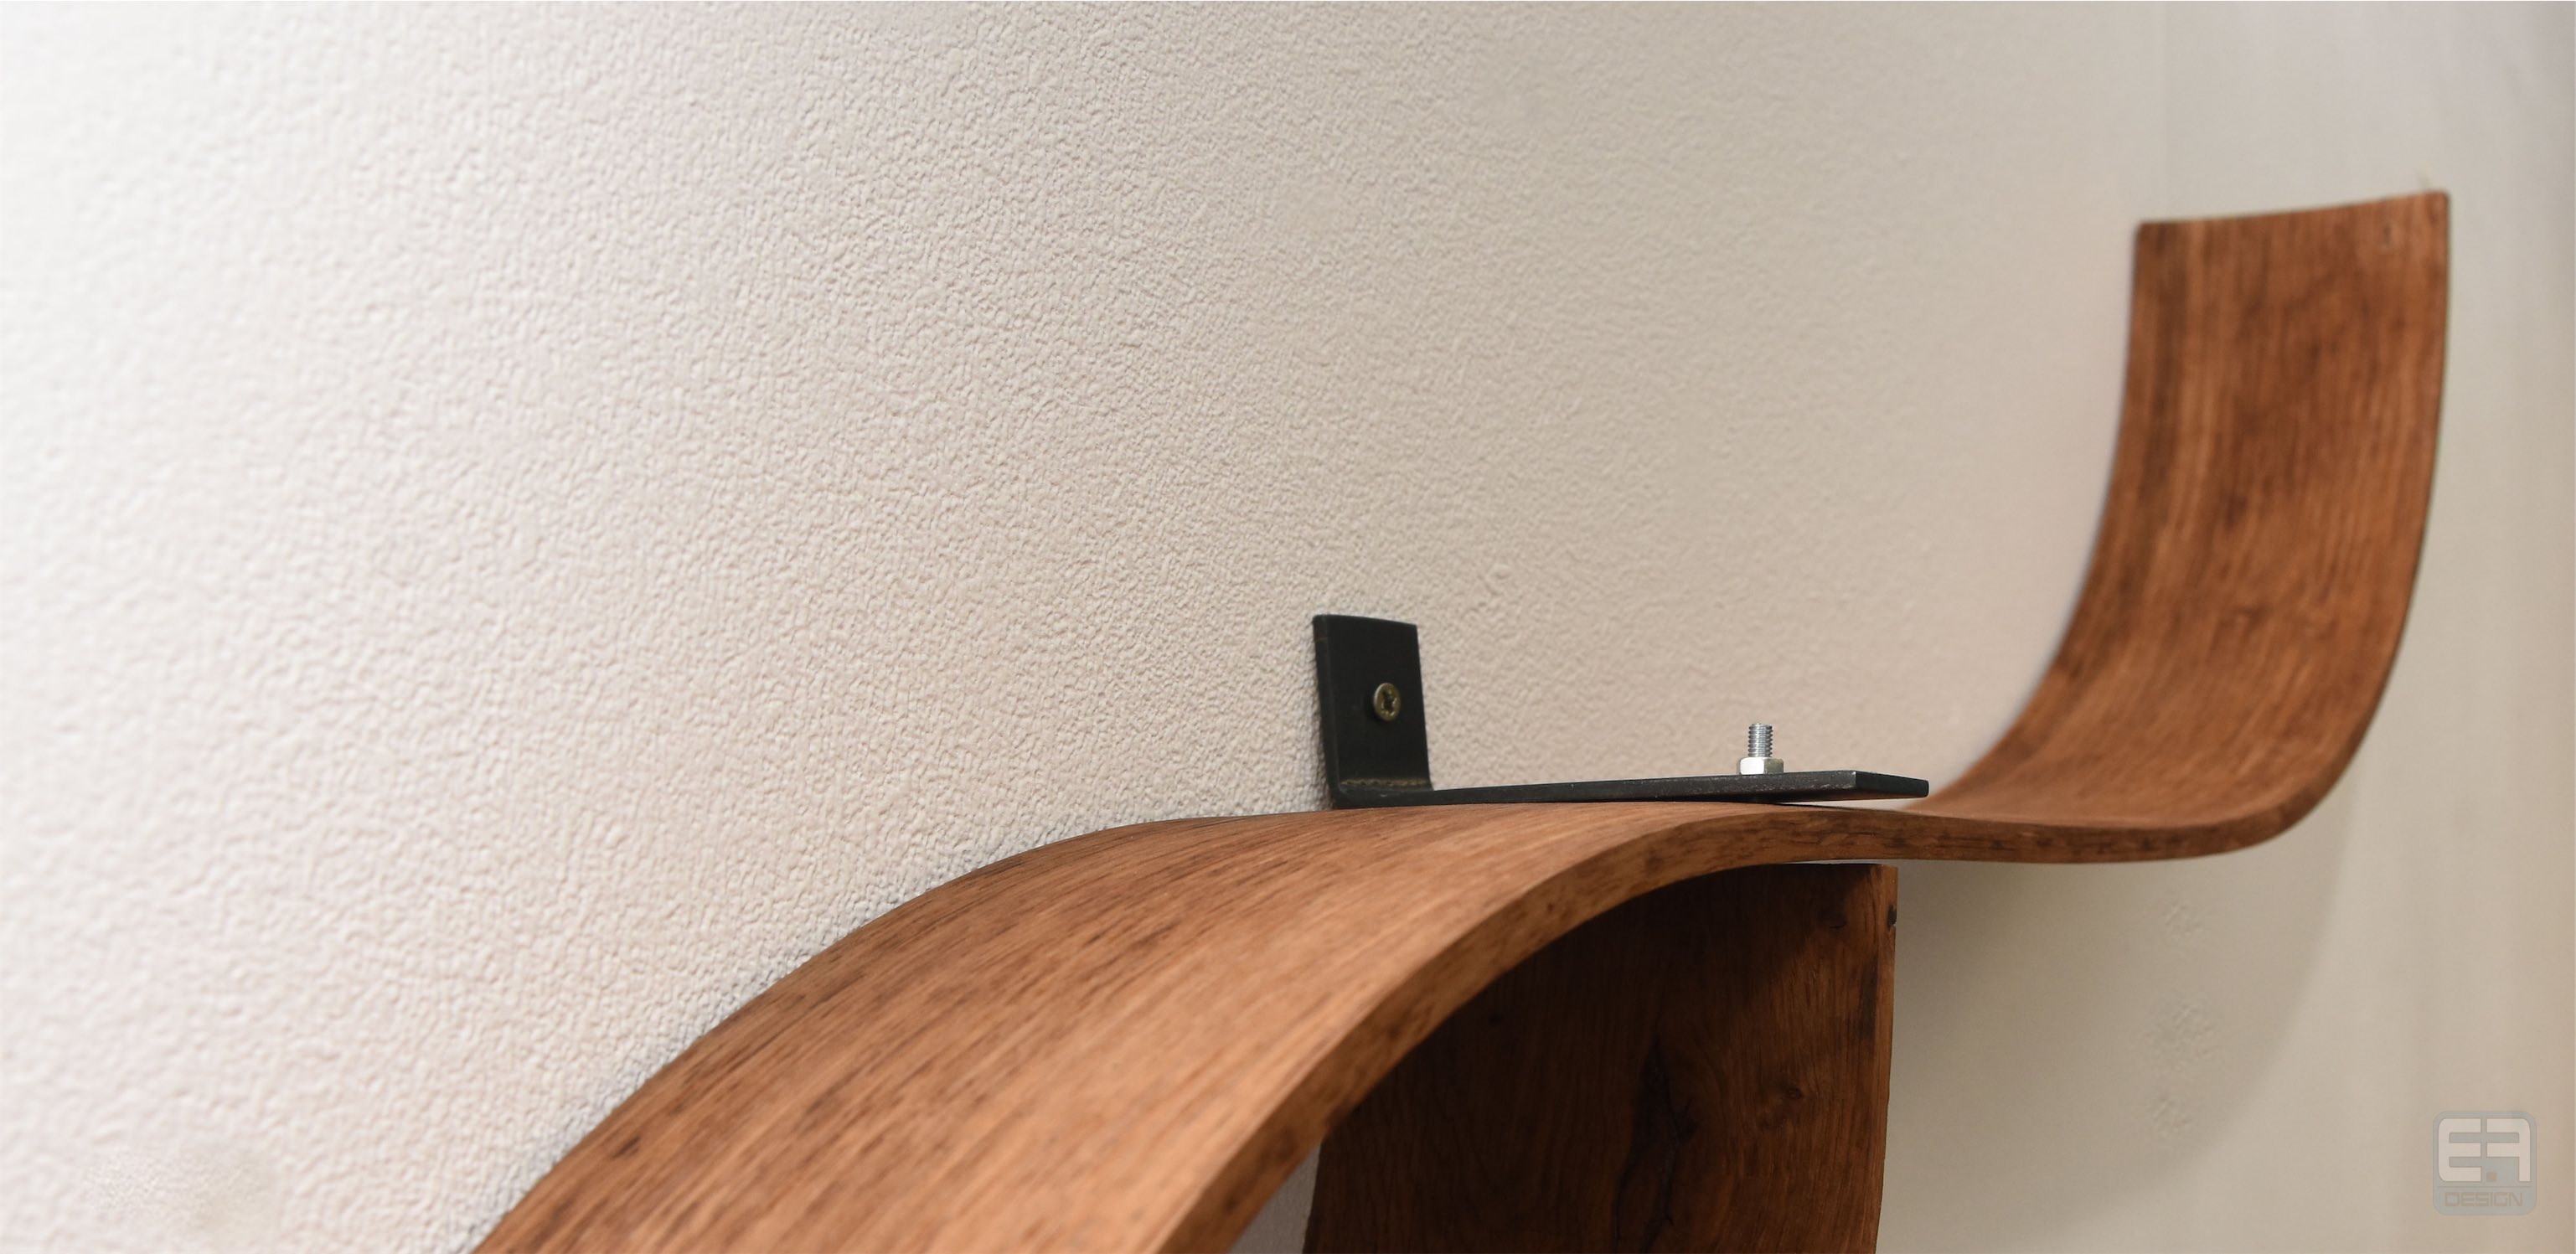 curved wood shelf